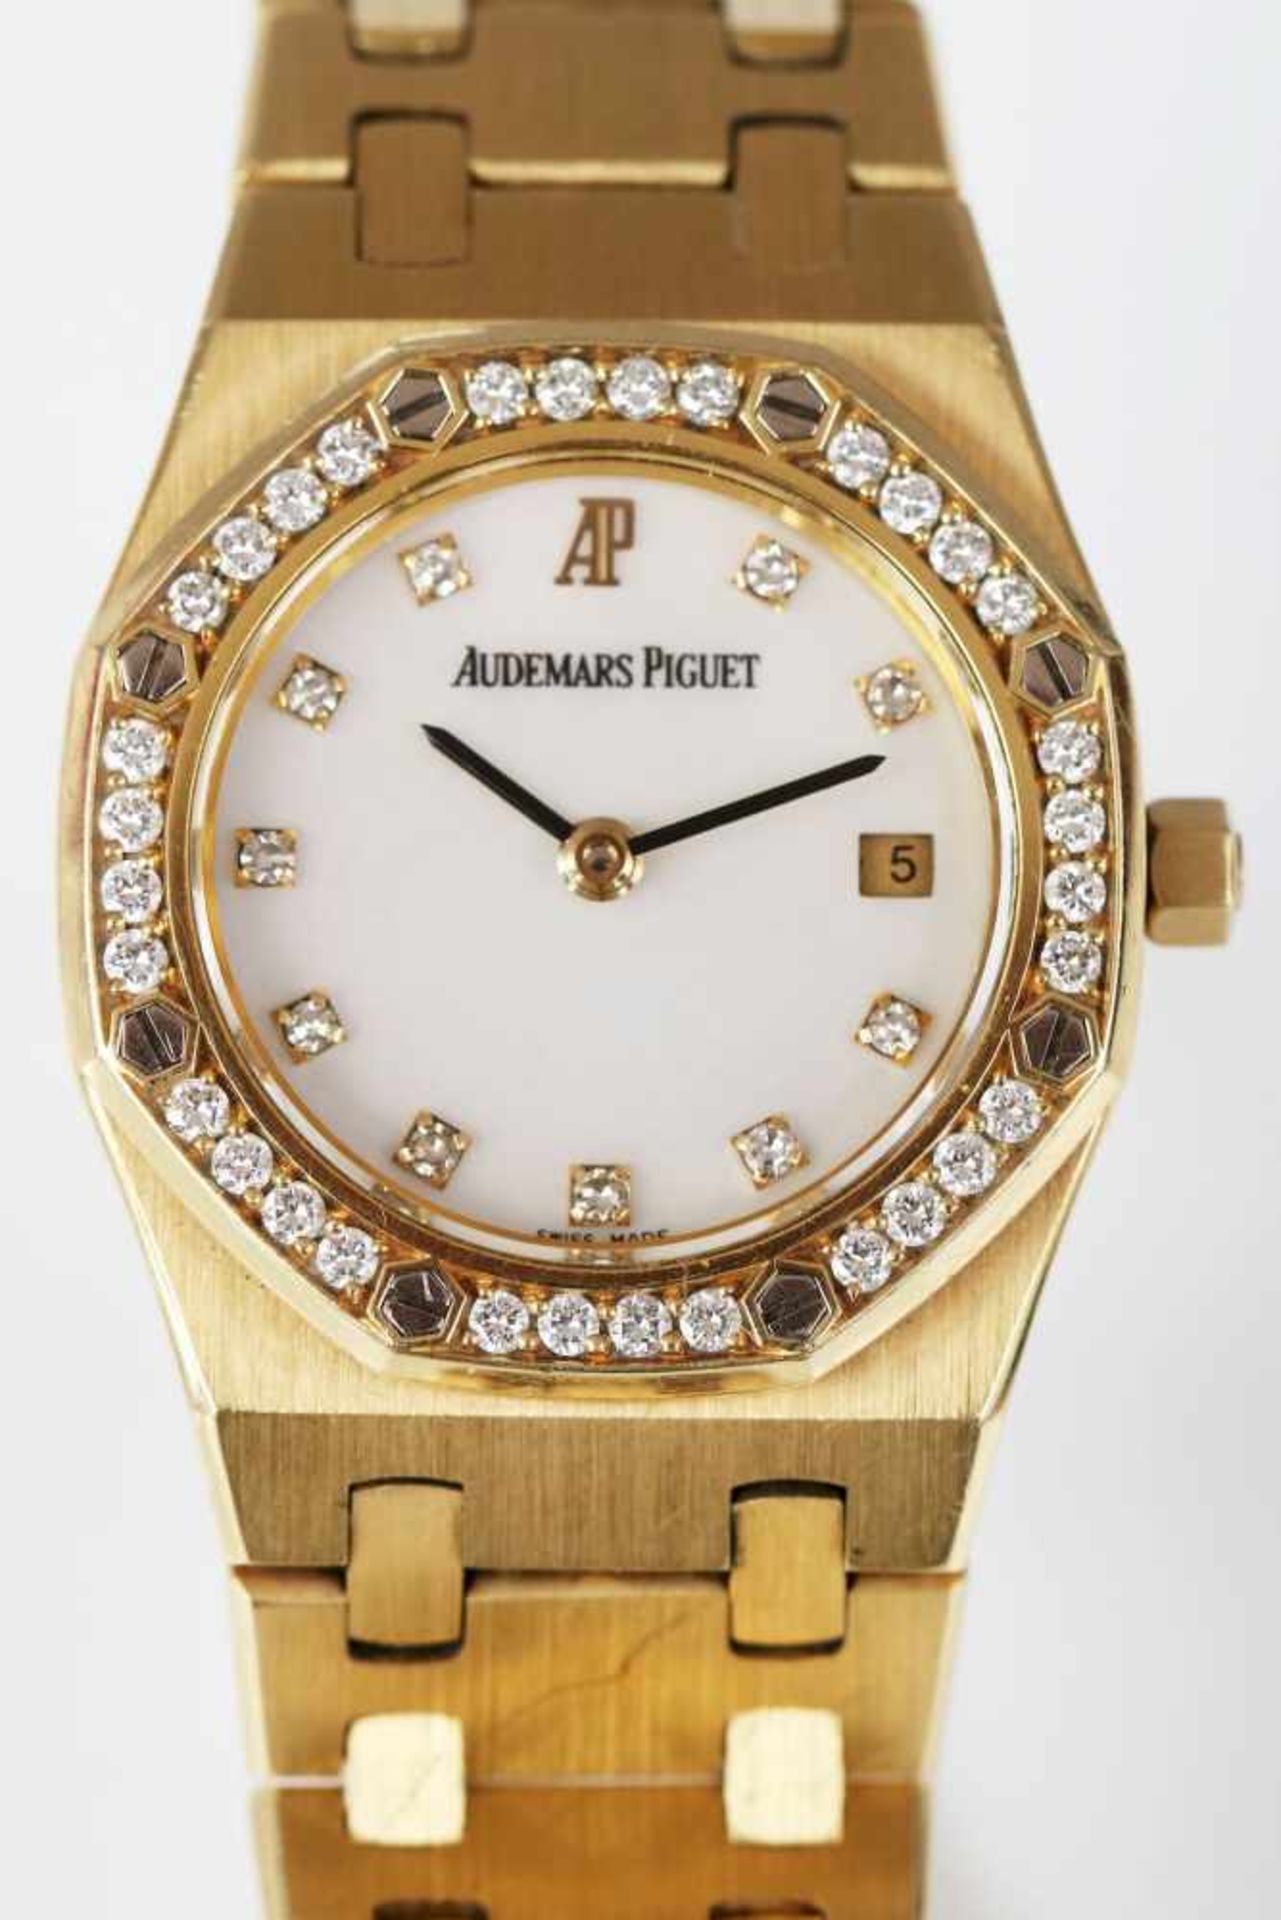 AUDEMARS PIGUET ArmbanduhrModell Royal Oak Lady, 750er Gelbgold (Gehäuse und Armband), oktogonale